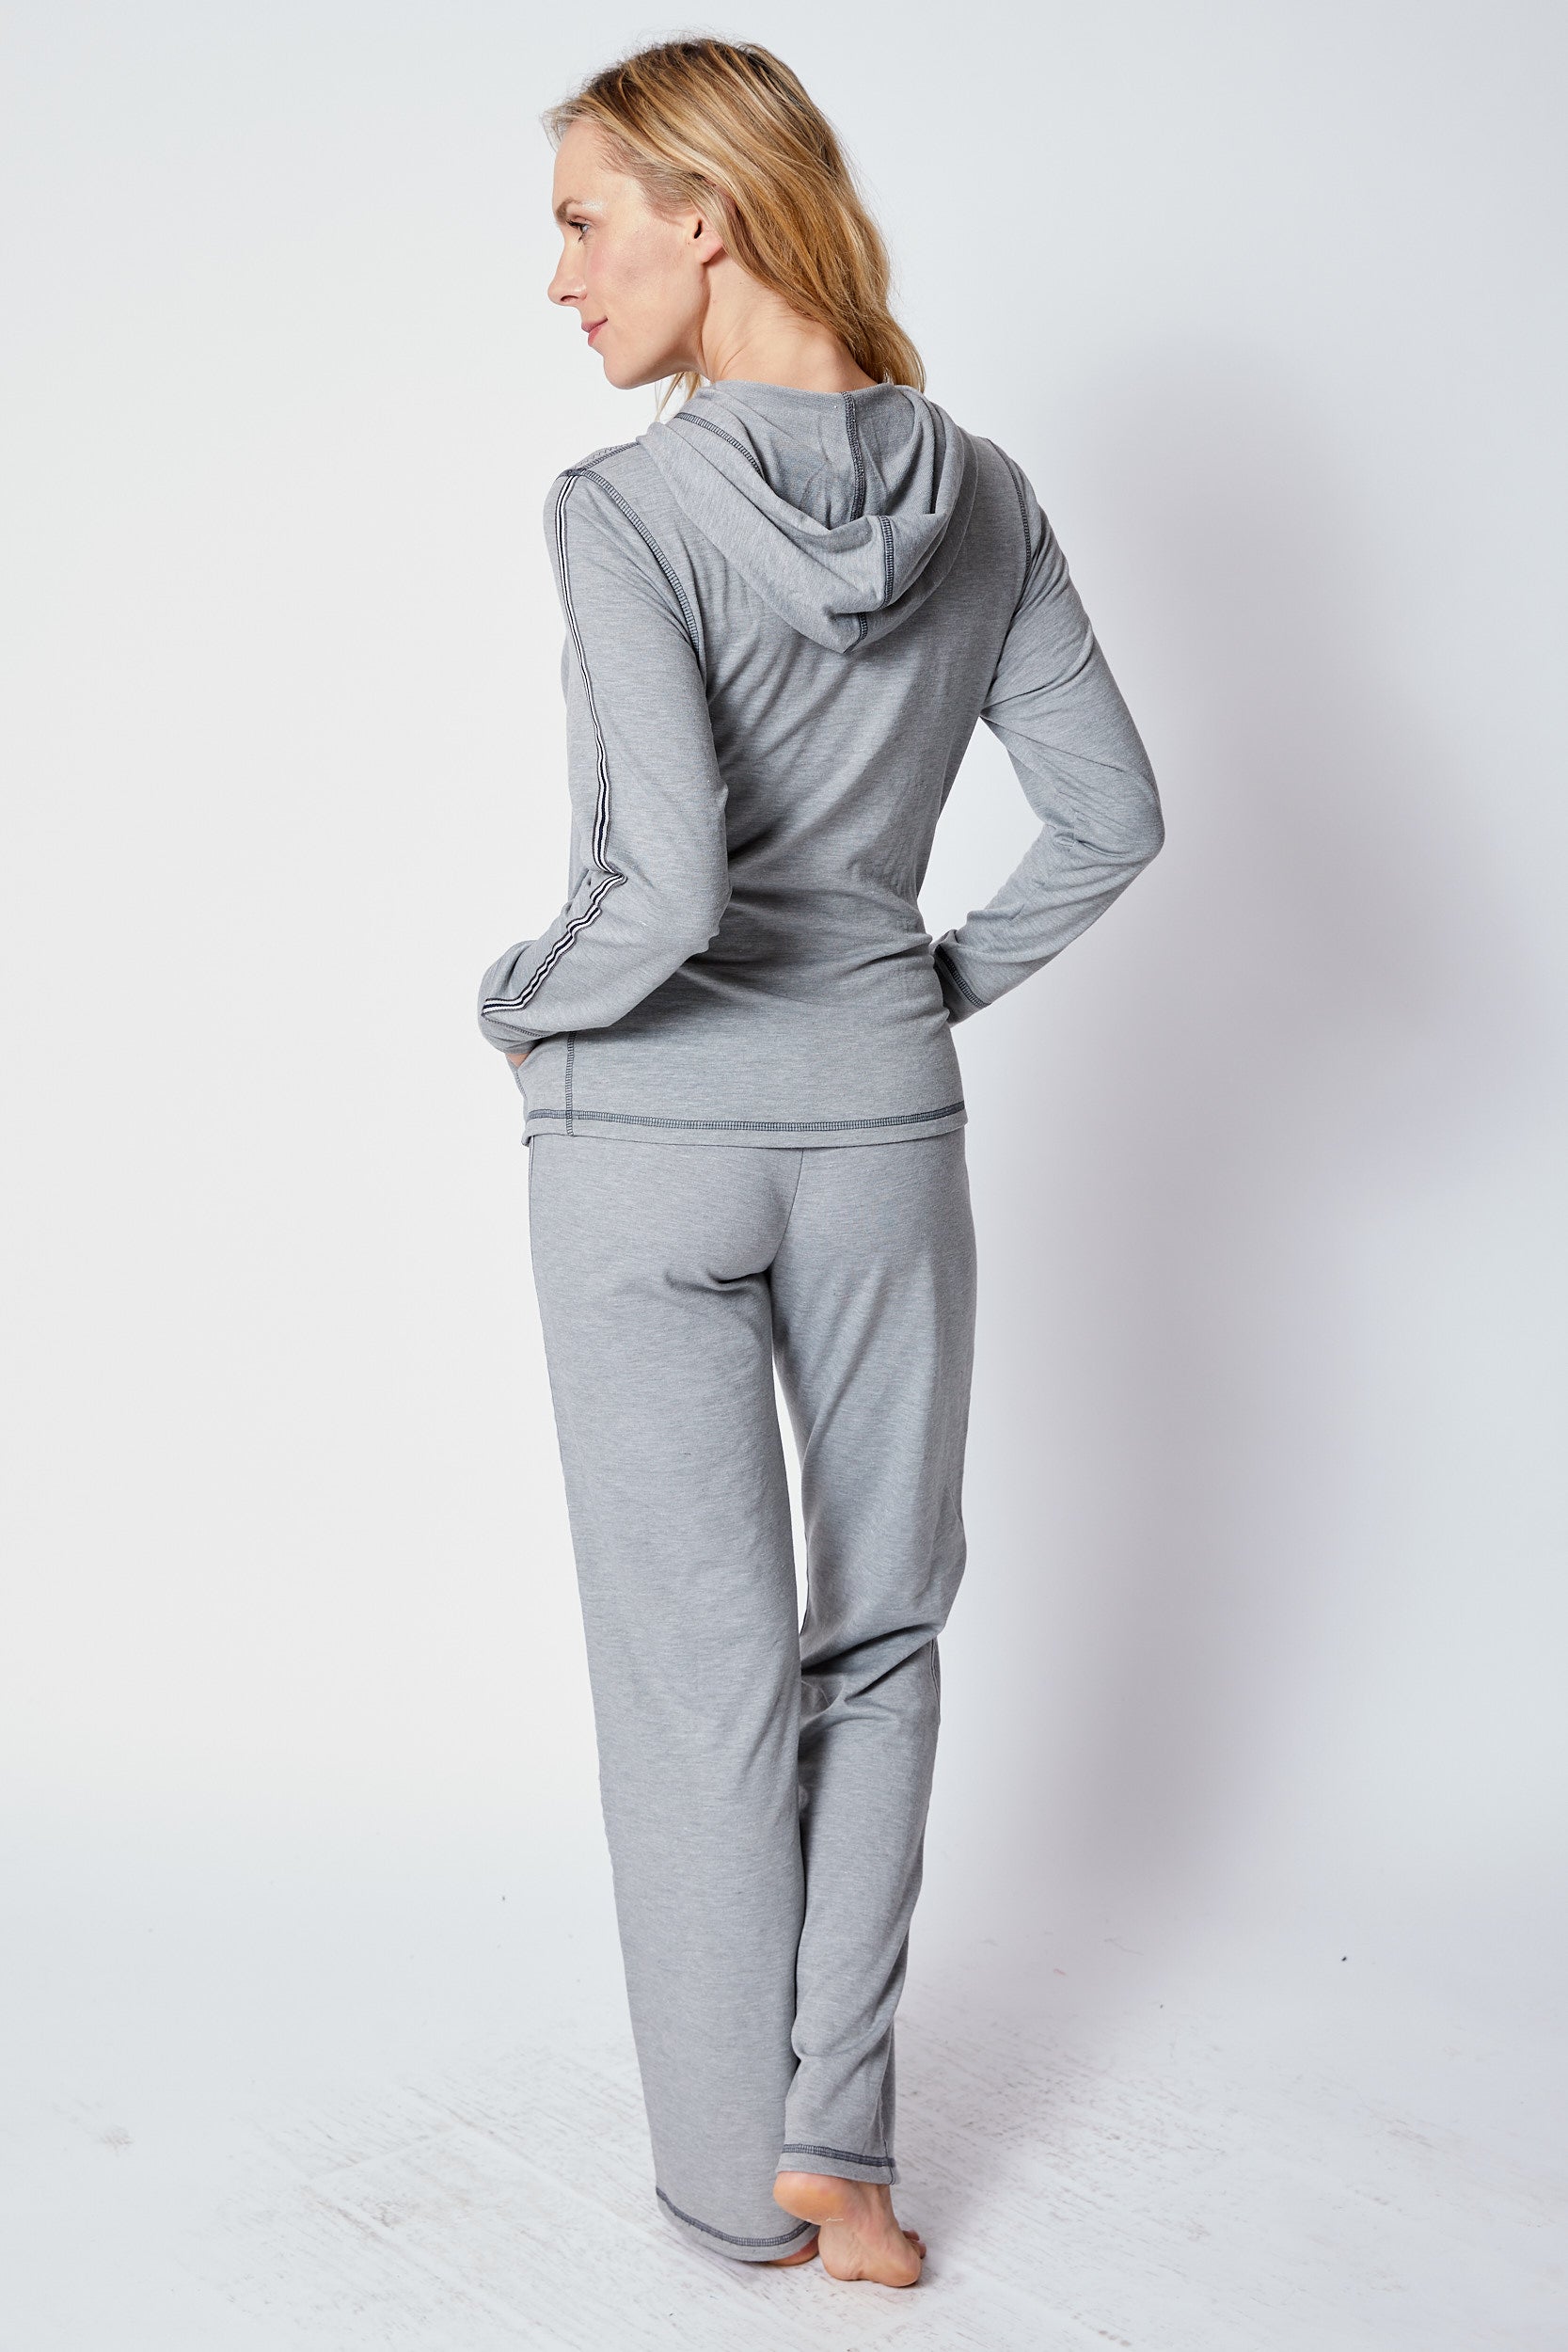 Gray Racer Stripe Sweats - Jacqueline B Clothing